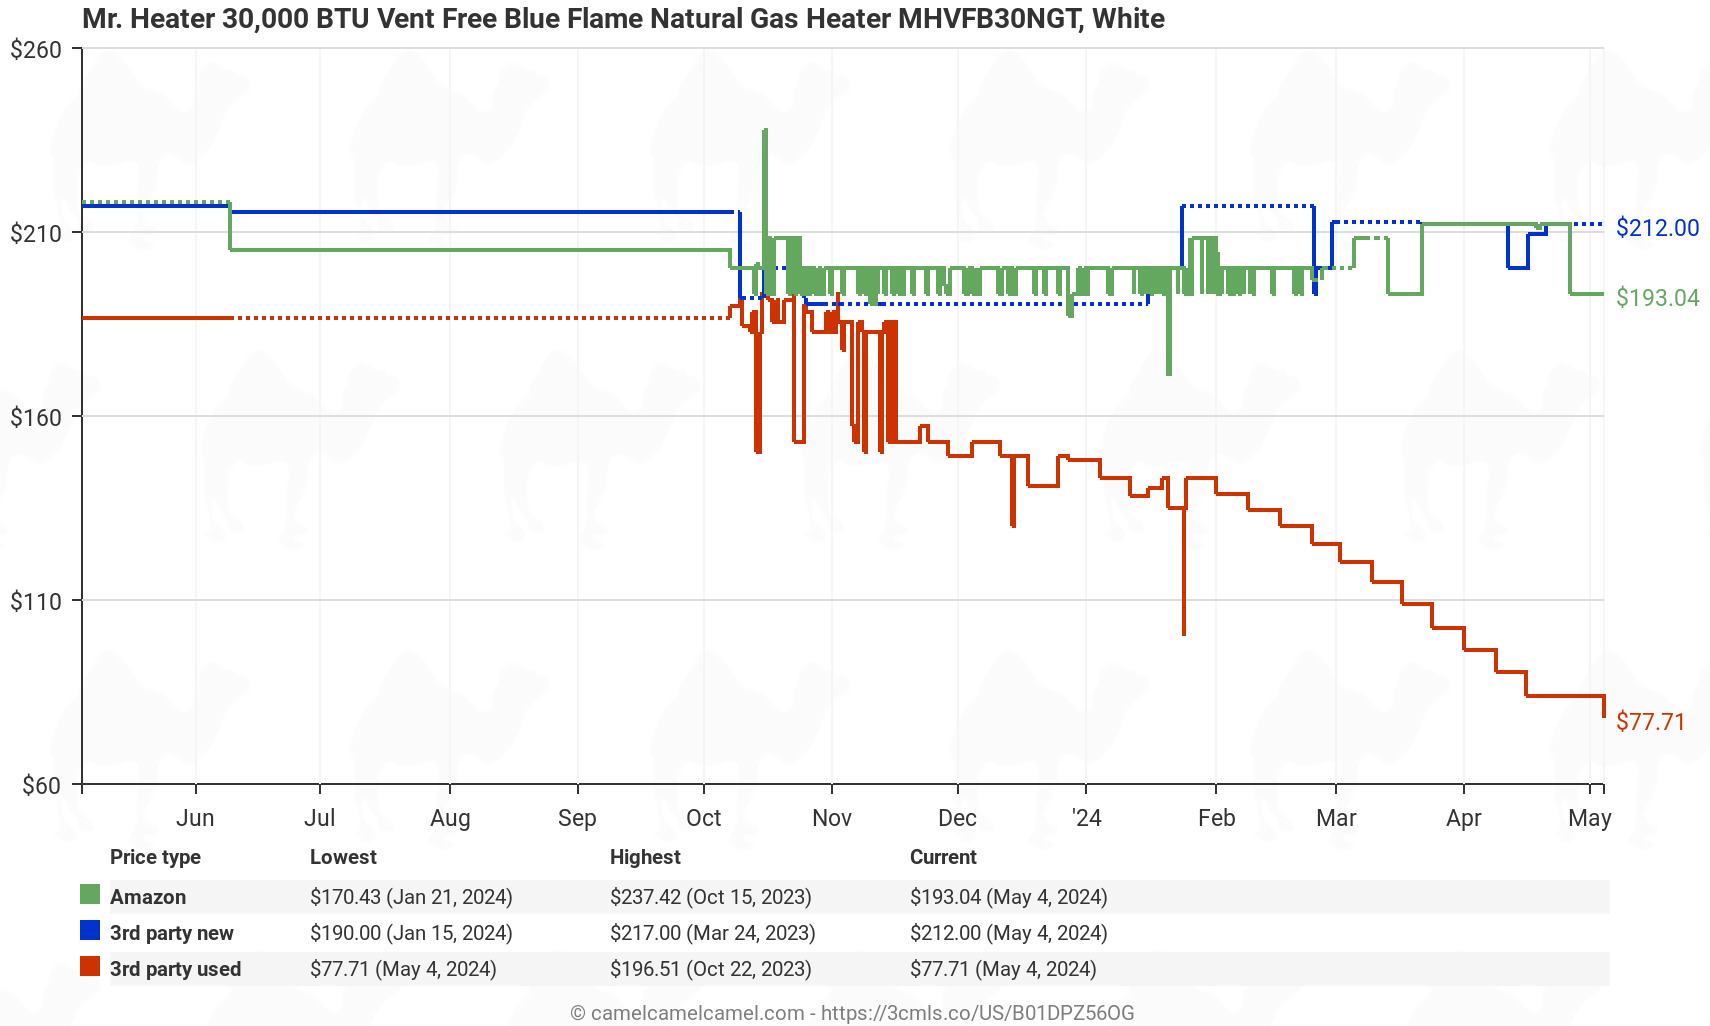 Mr. Heater 30,000 BTU Vent Free Blue Flame Natural Gas Heater MHVFB30NGT - Price History: B01DPZ56OG